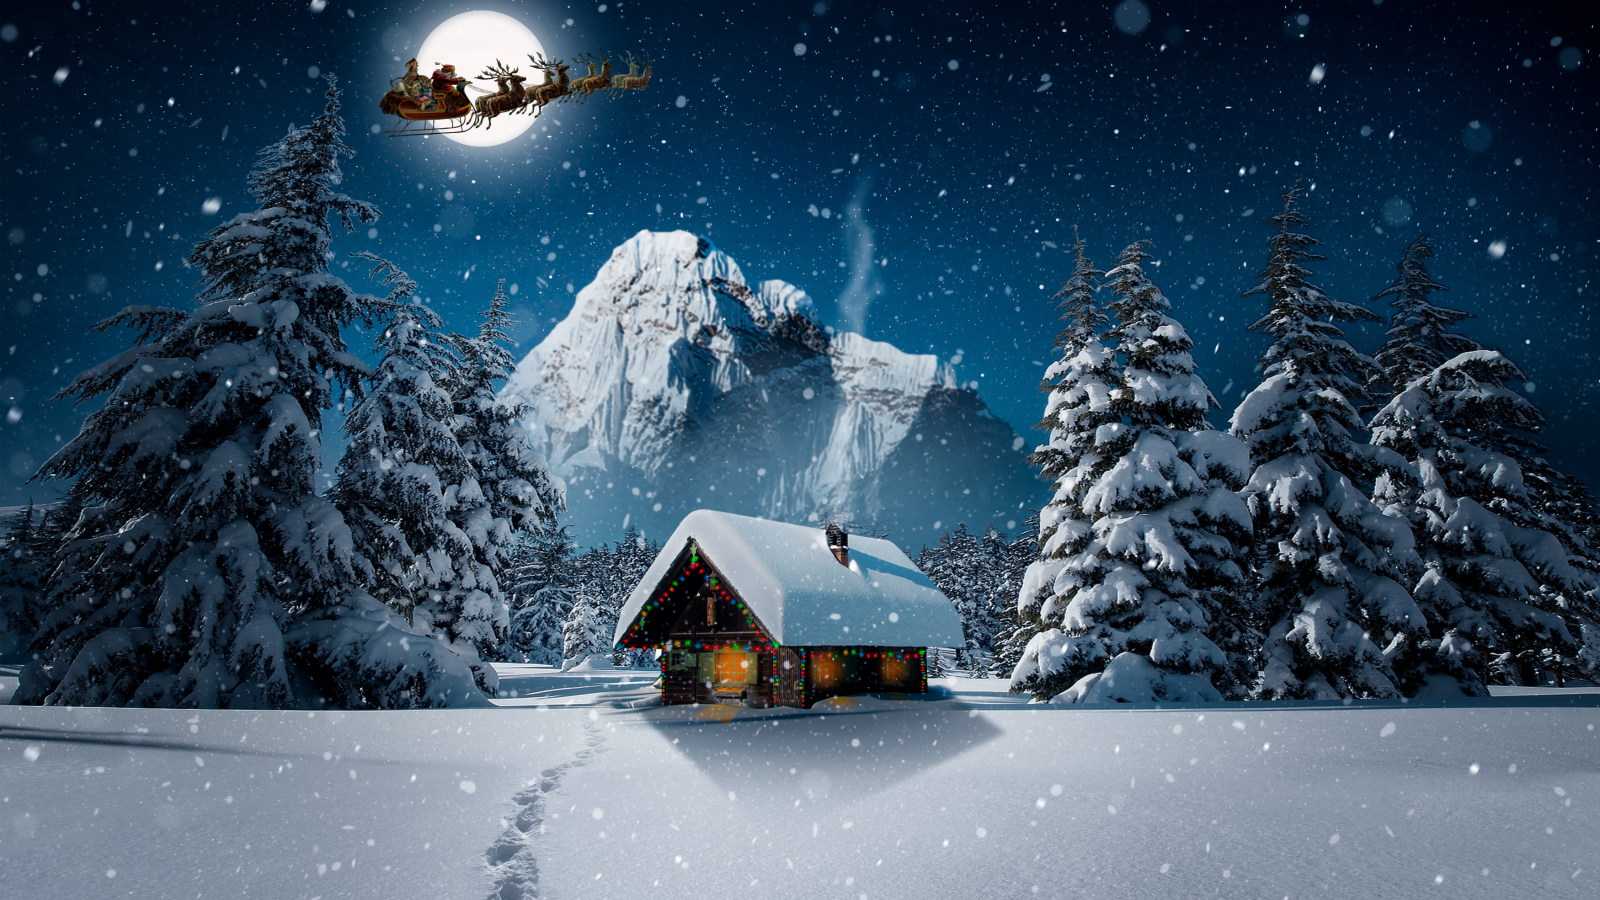 Snowfall Winter Hut House Christmas